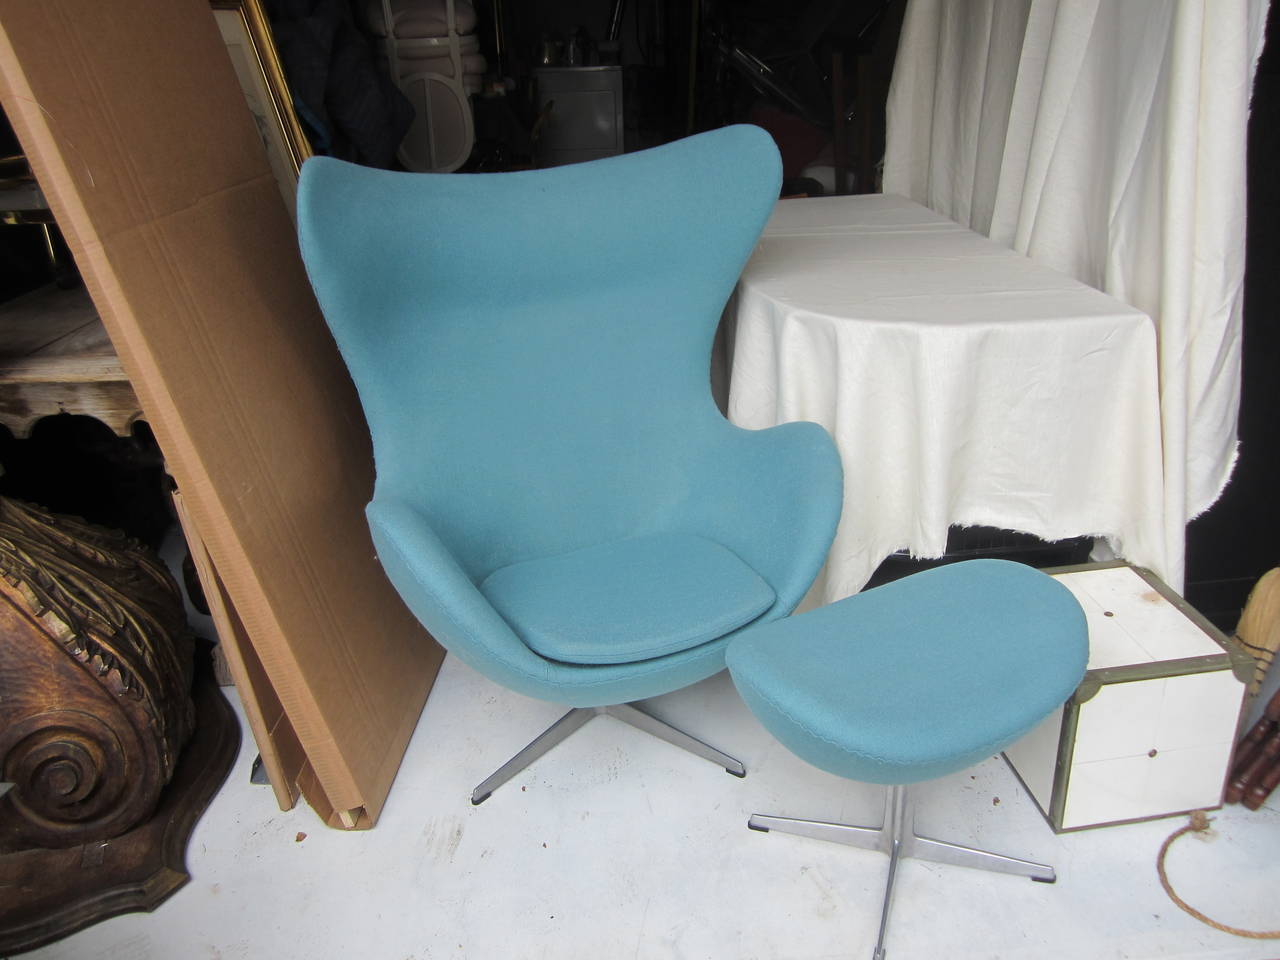 Arne Jacobsen's egg chair and ottoman designed for the SAS Royal Hotel and Air Terminal in Copenhagen. Fiberglass shell with foam padding, light blue polyester bouclé upholstery, set on aluminum base by Fritz Hansen.